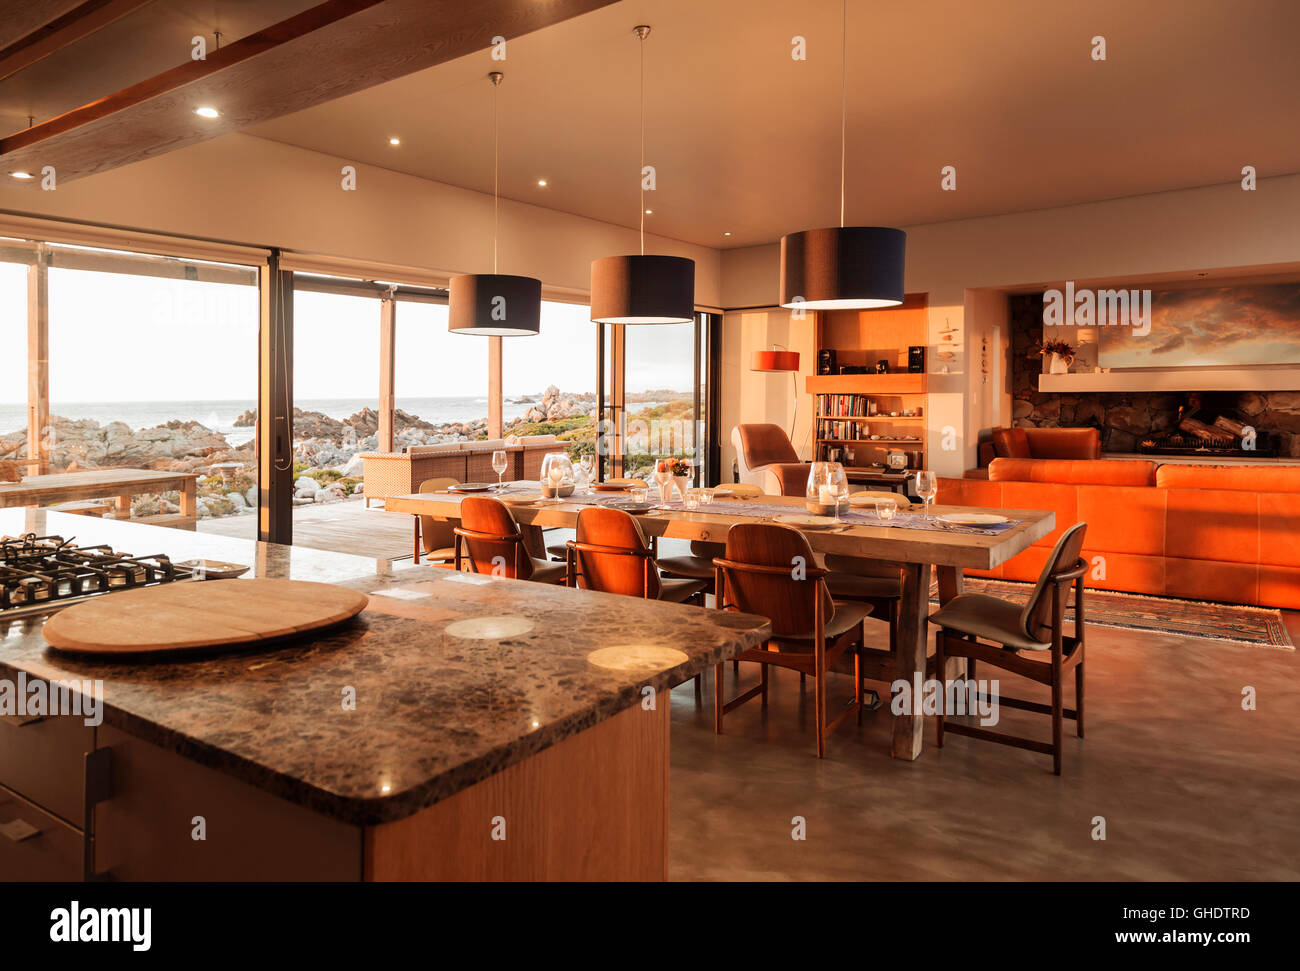 Sunny home showcase interior overlooking ocean Stock Photo - Alamy